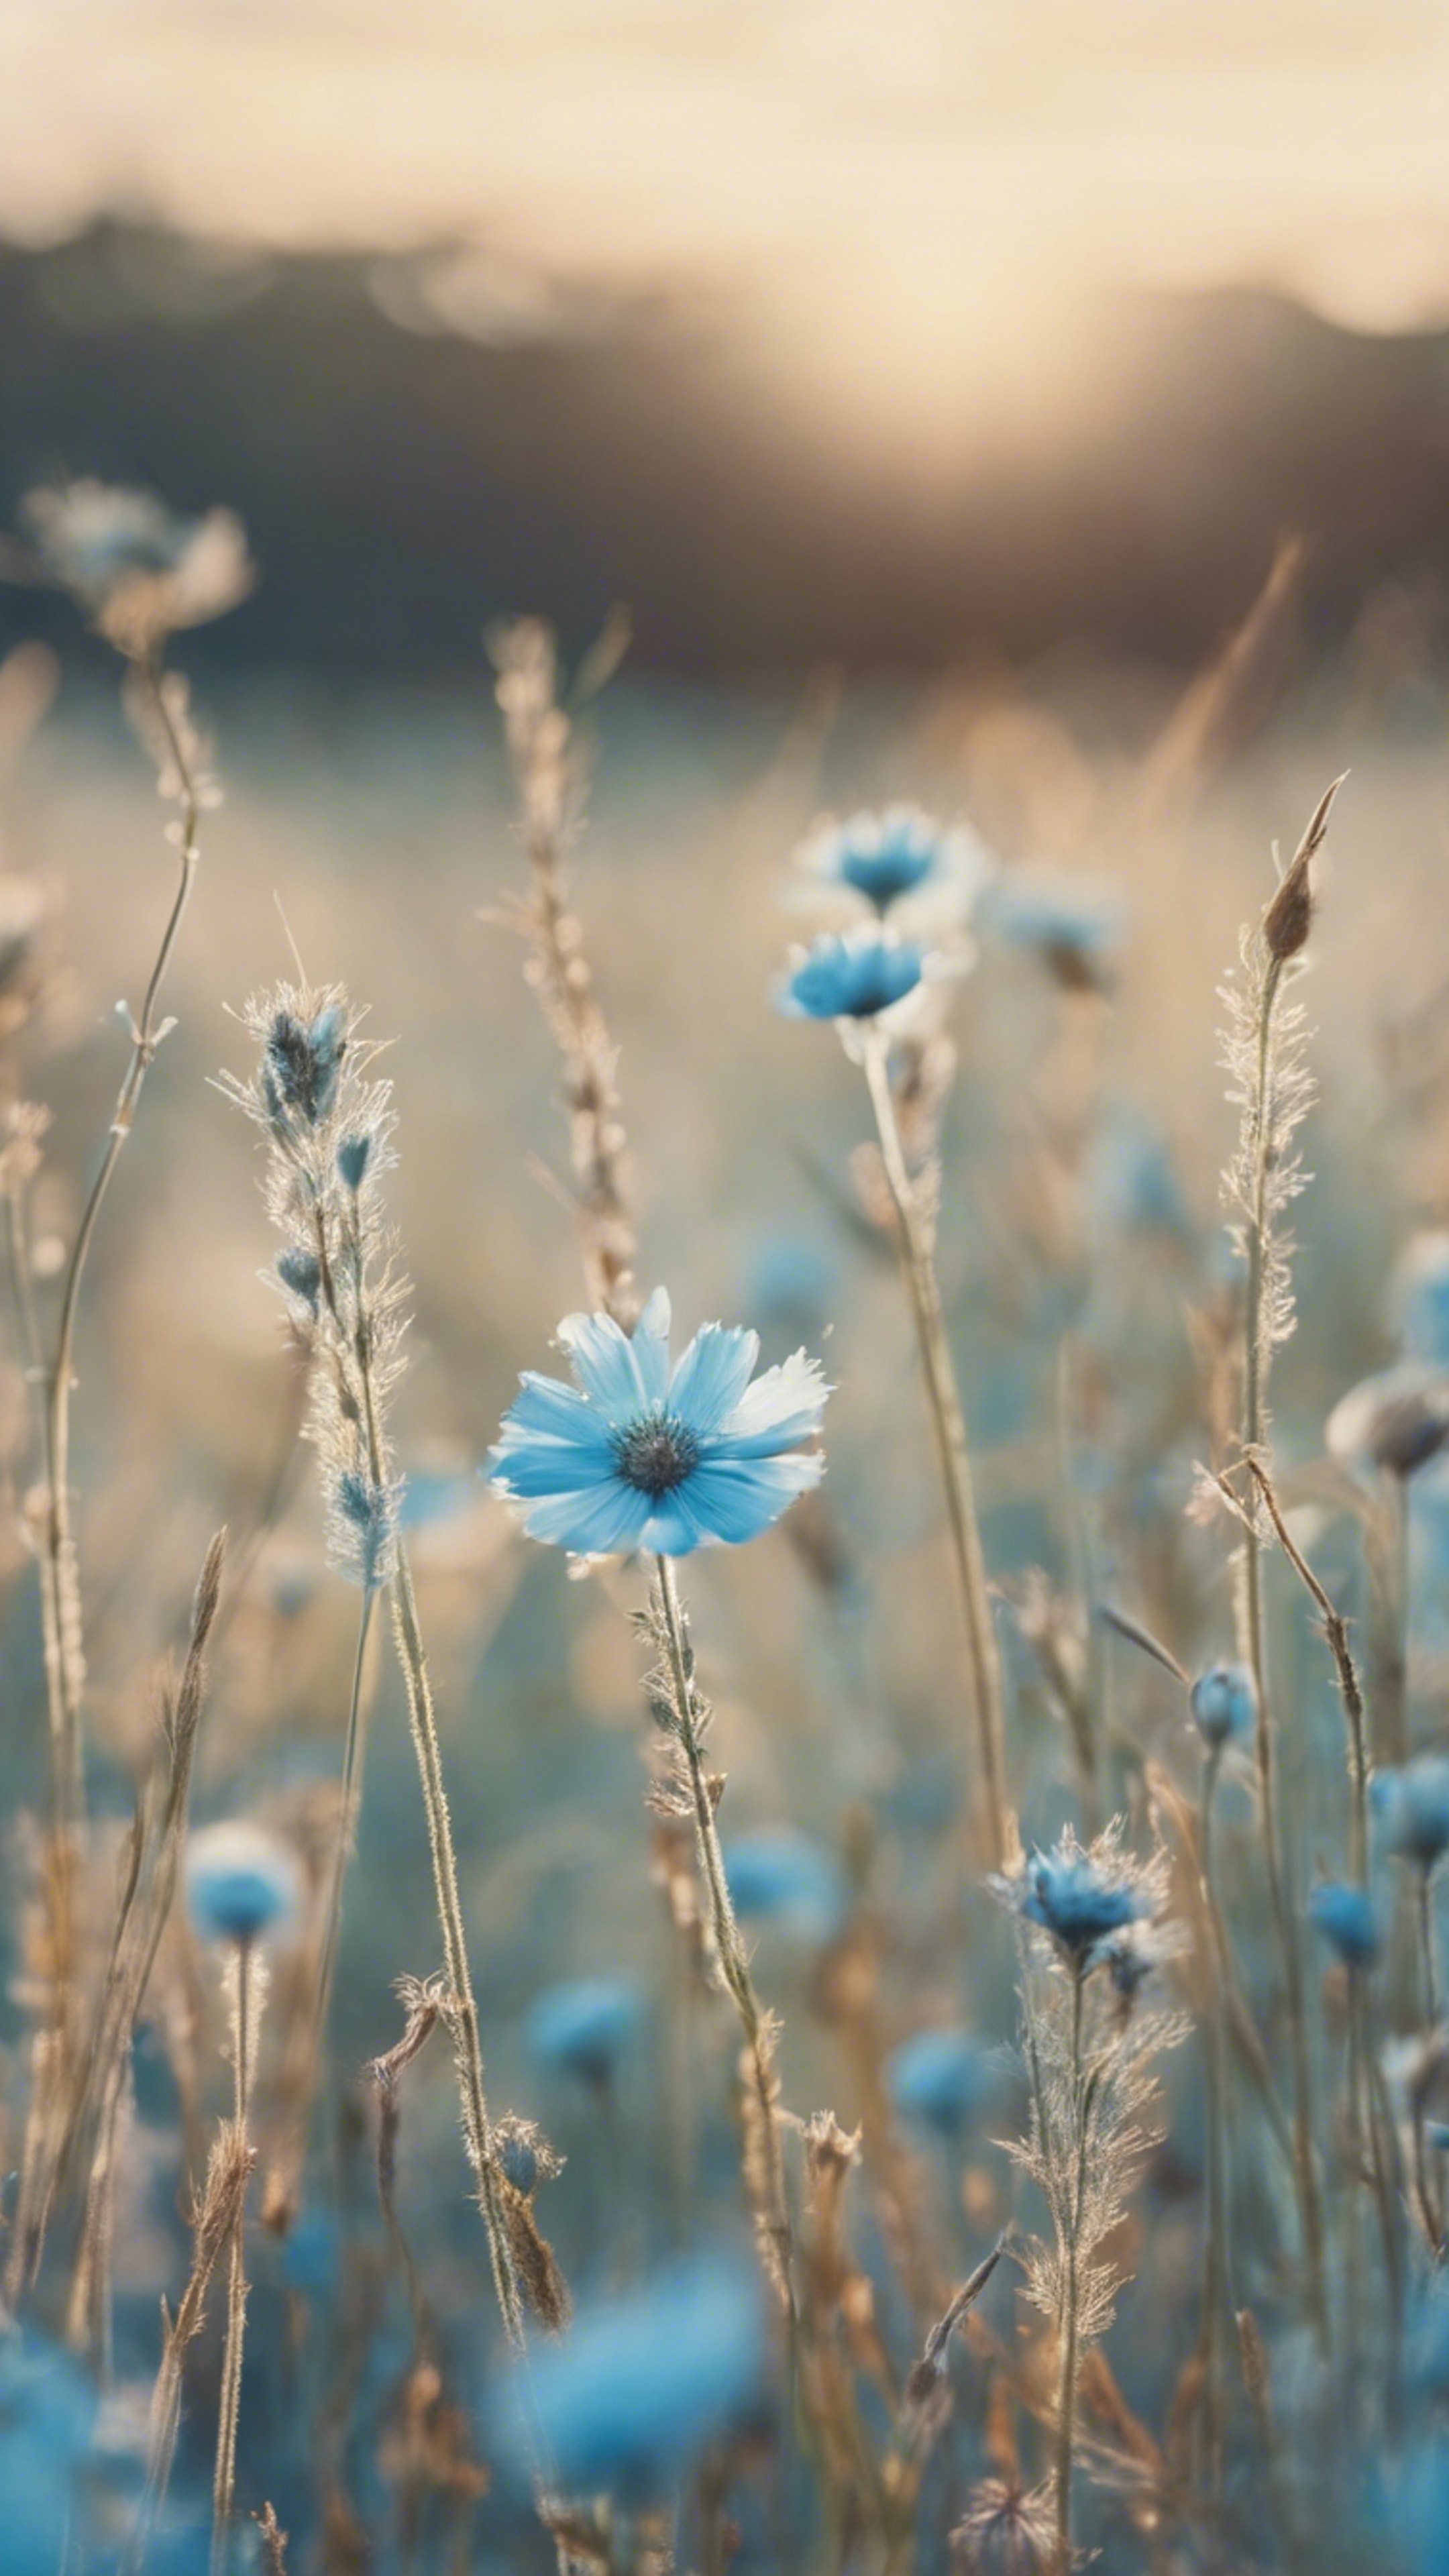 A peaceful pastel blue meadow under a clear sky. Behang[237c4d0b569745d38be8]